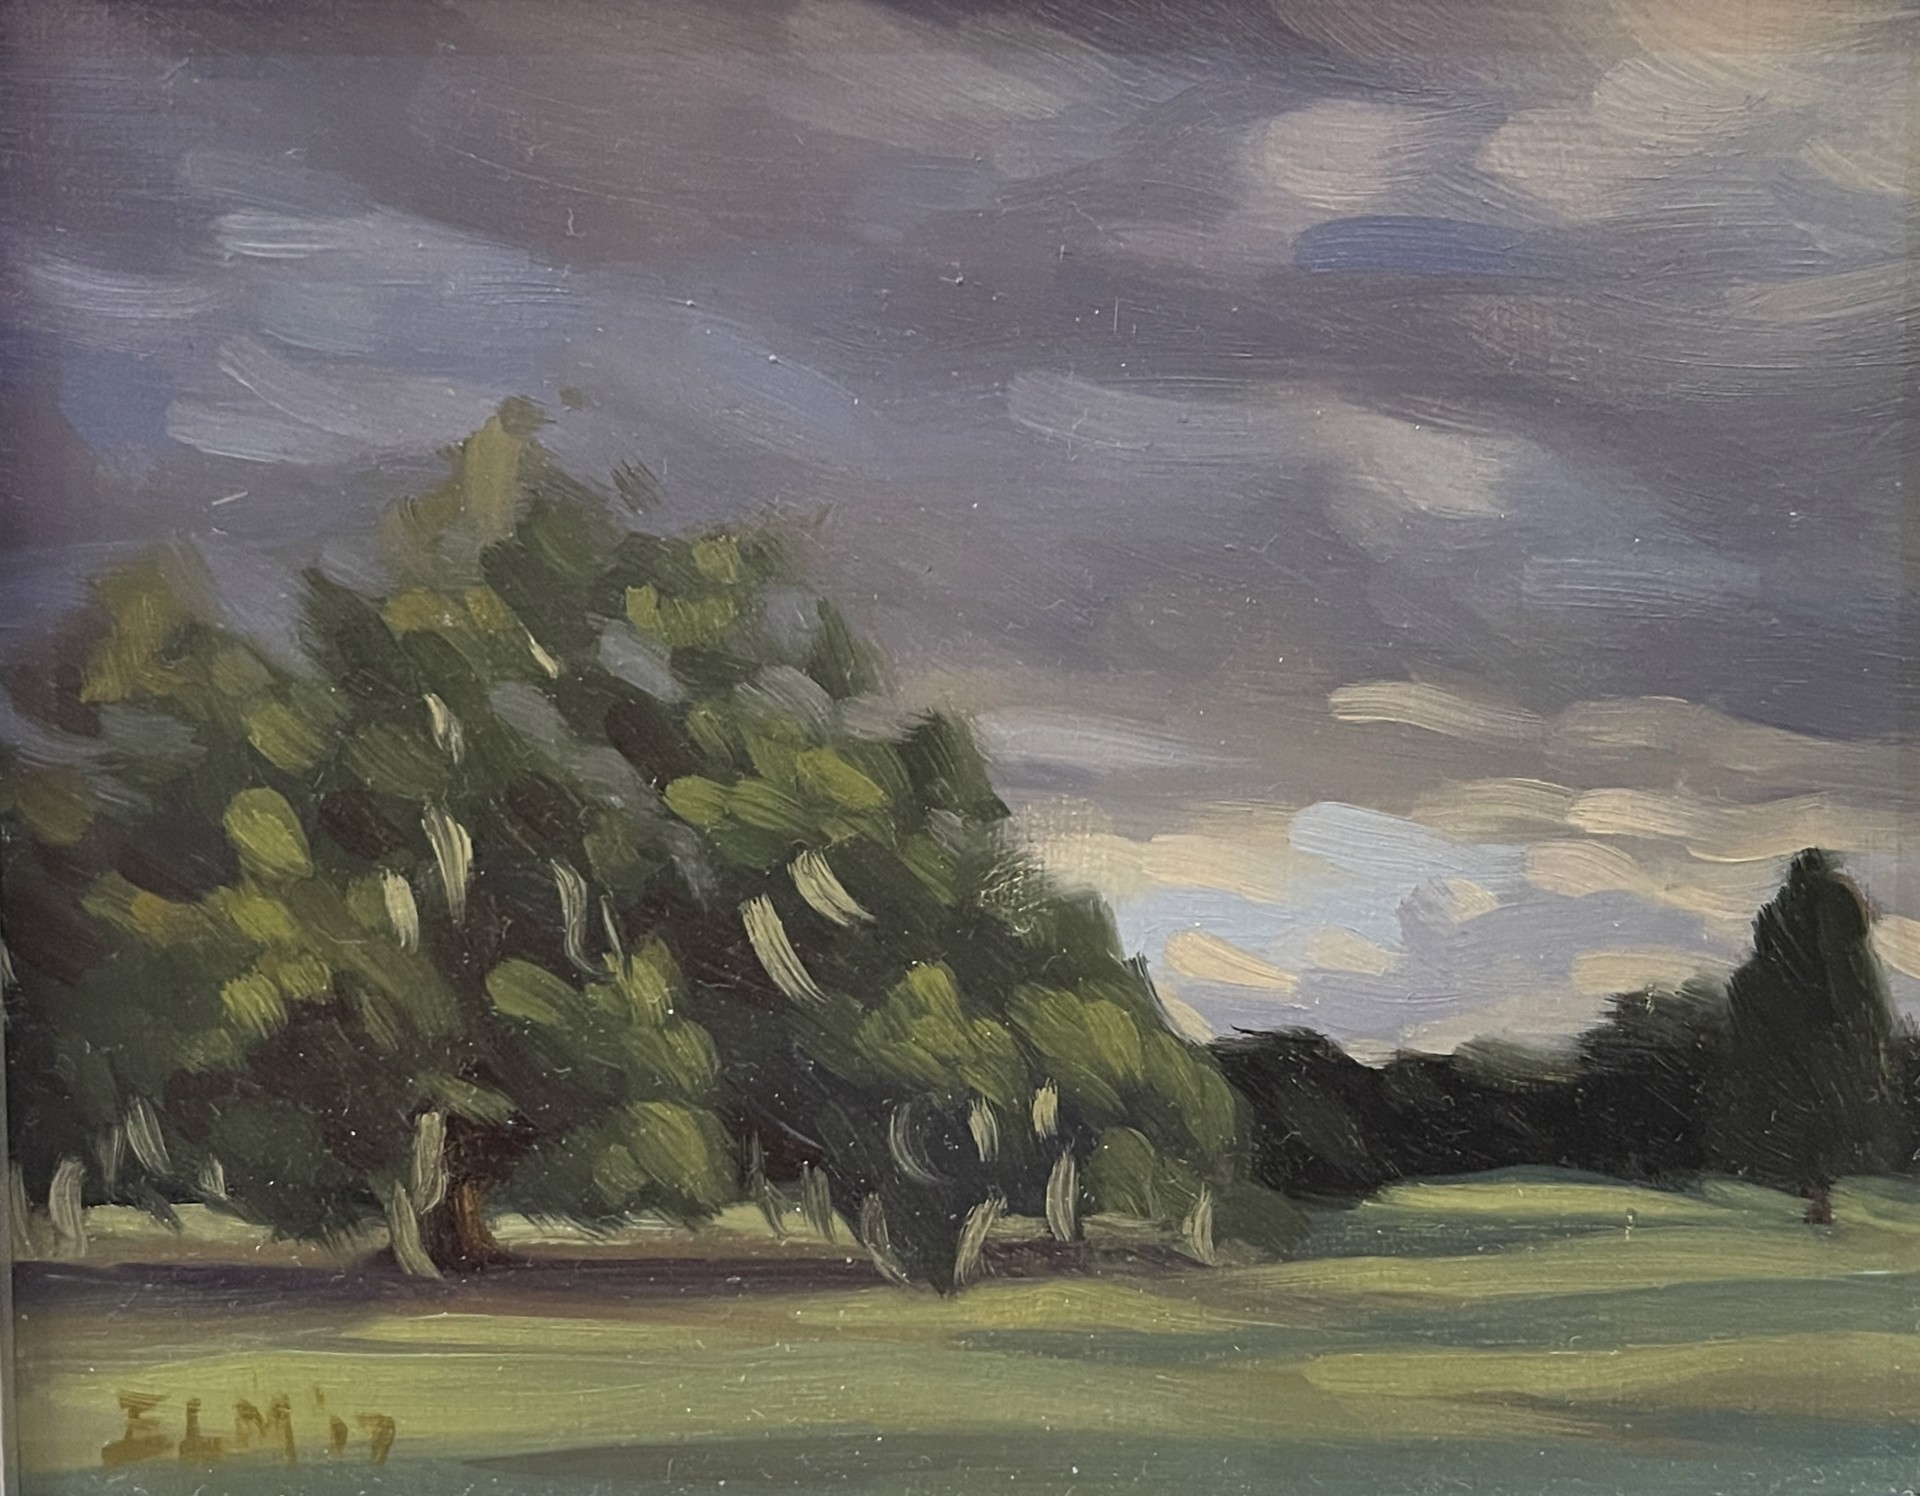 Clouds Over Audubon Golf Course by Elizabeth McMillan